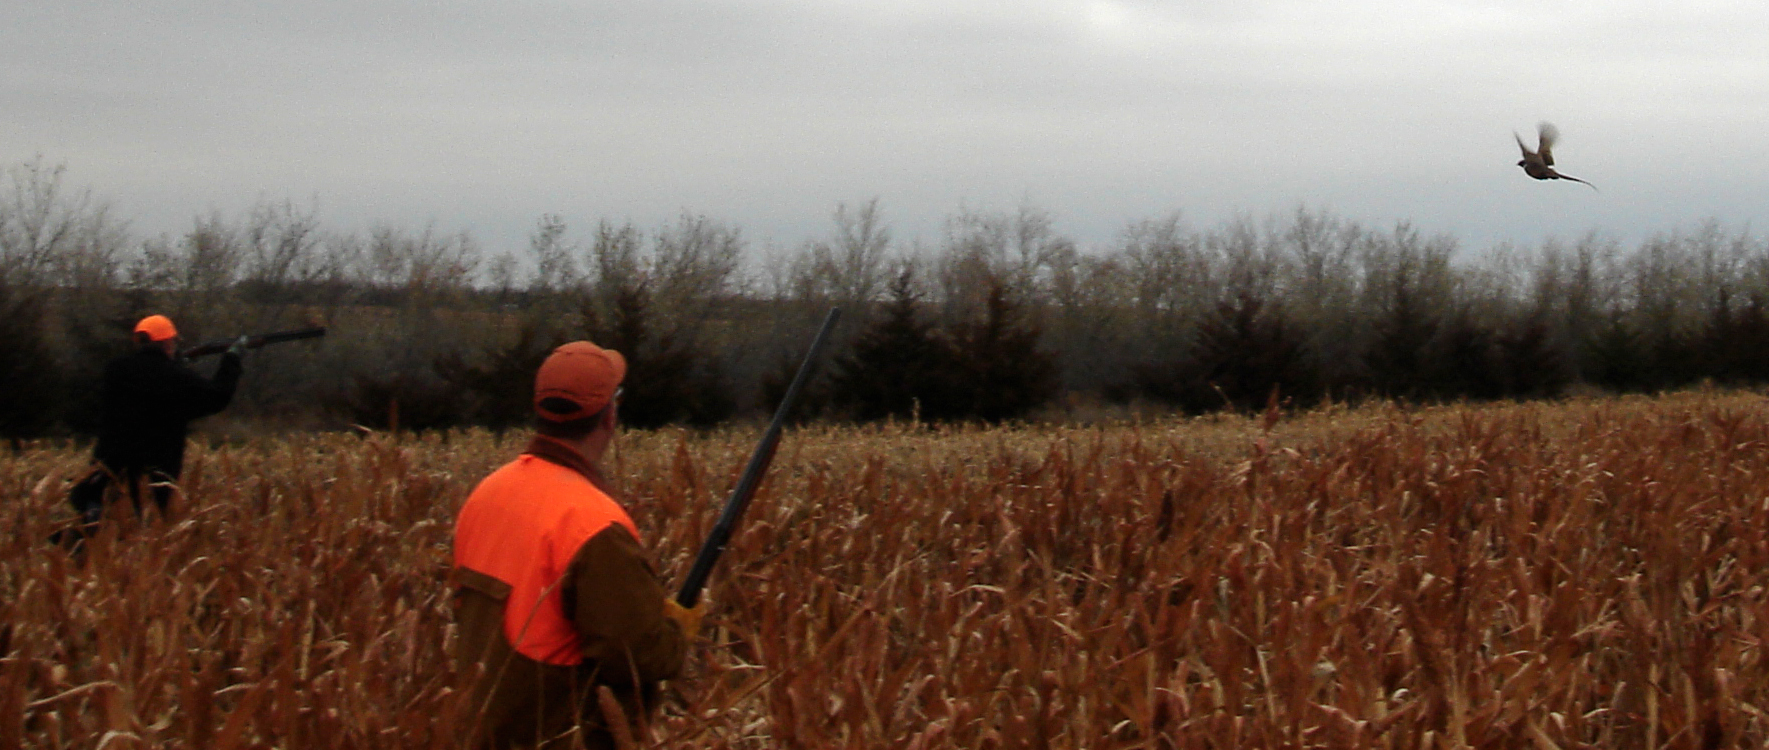 Pheasant Hunting Photo Test